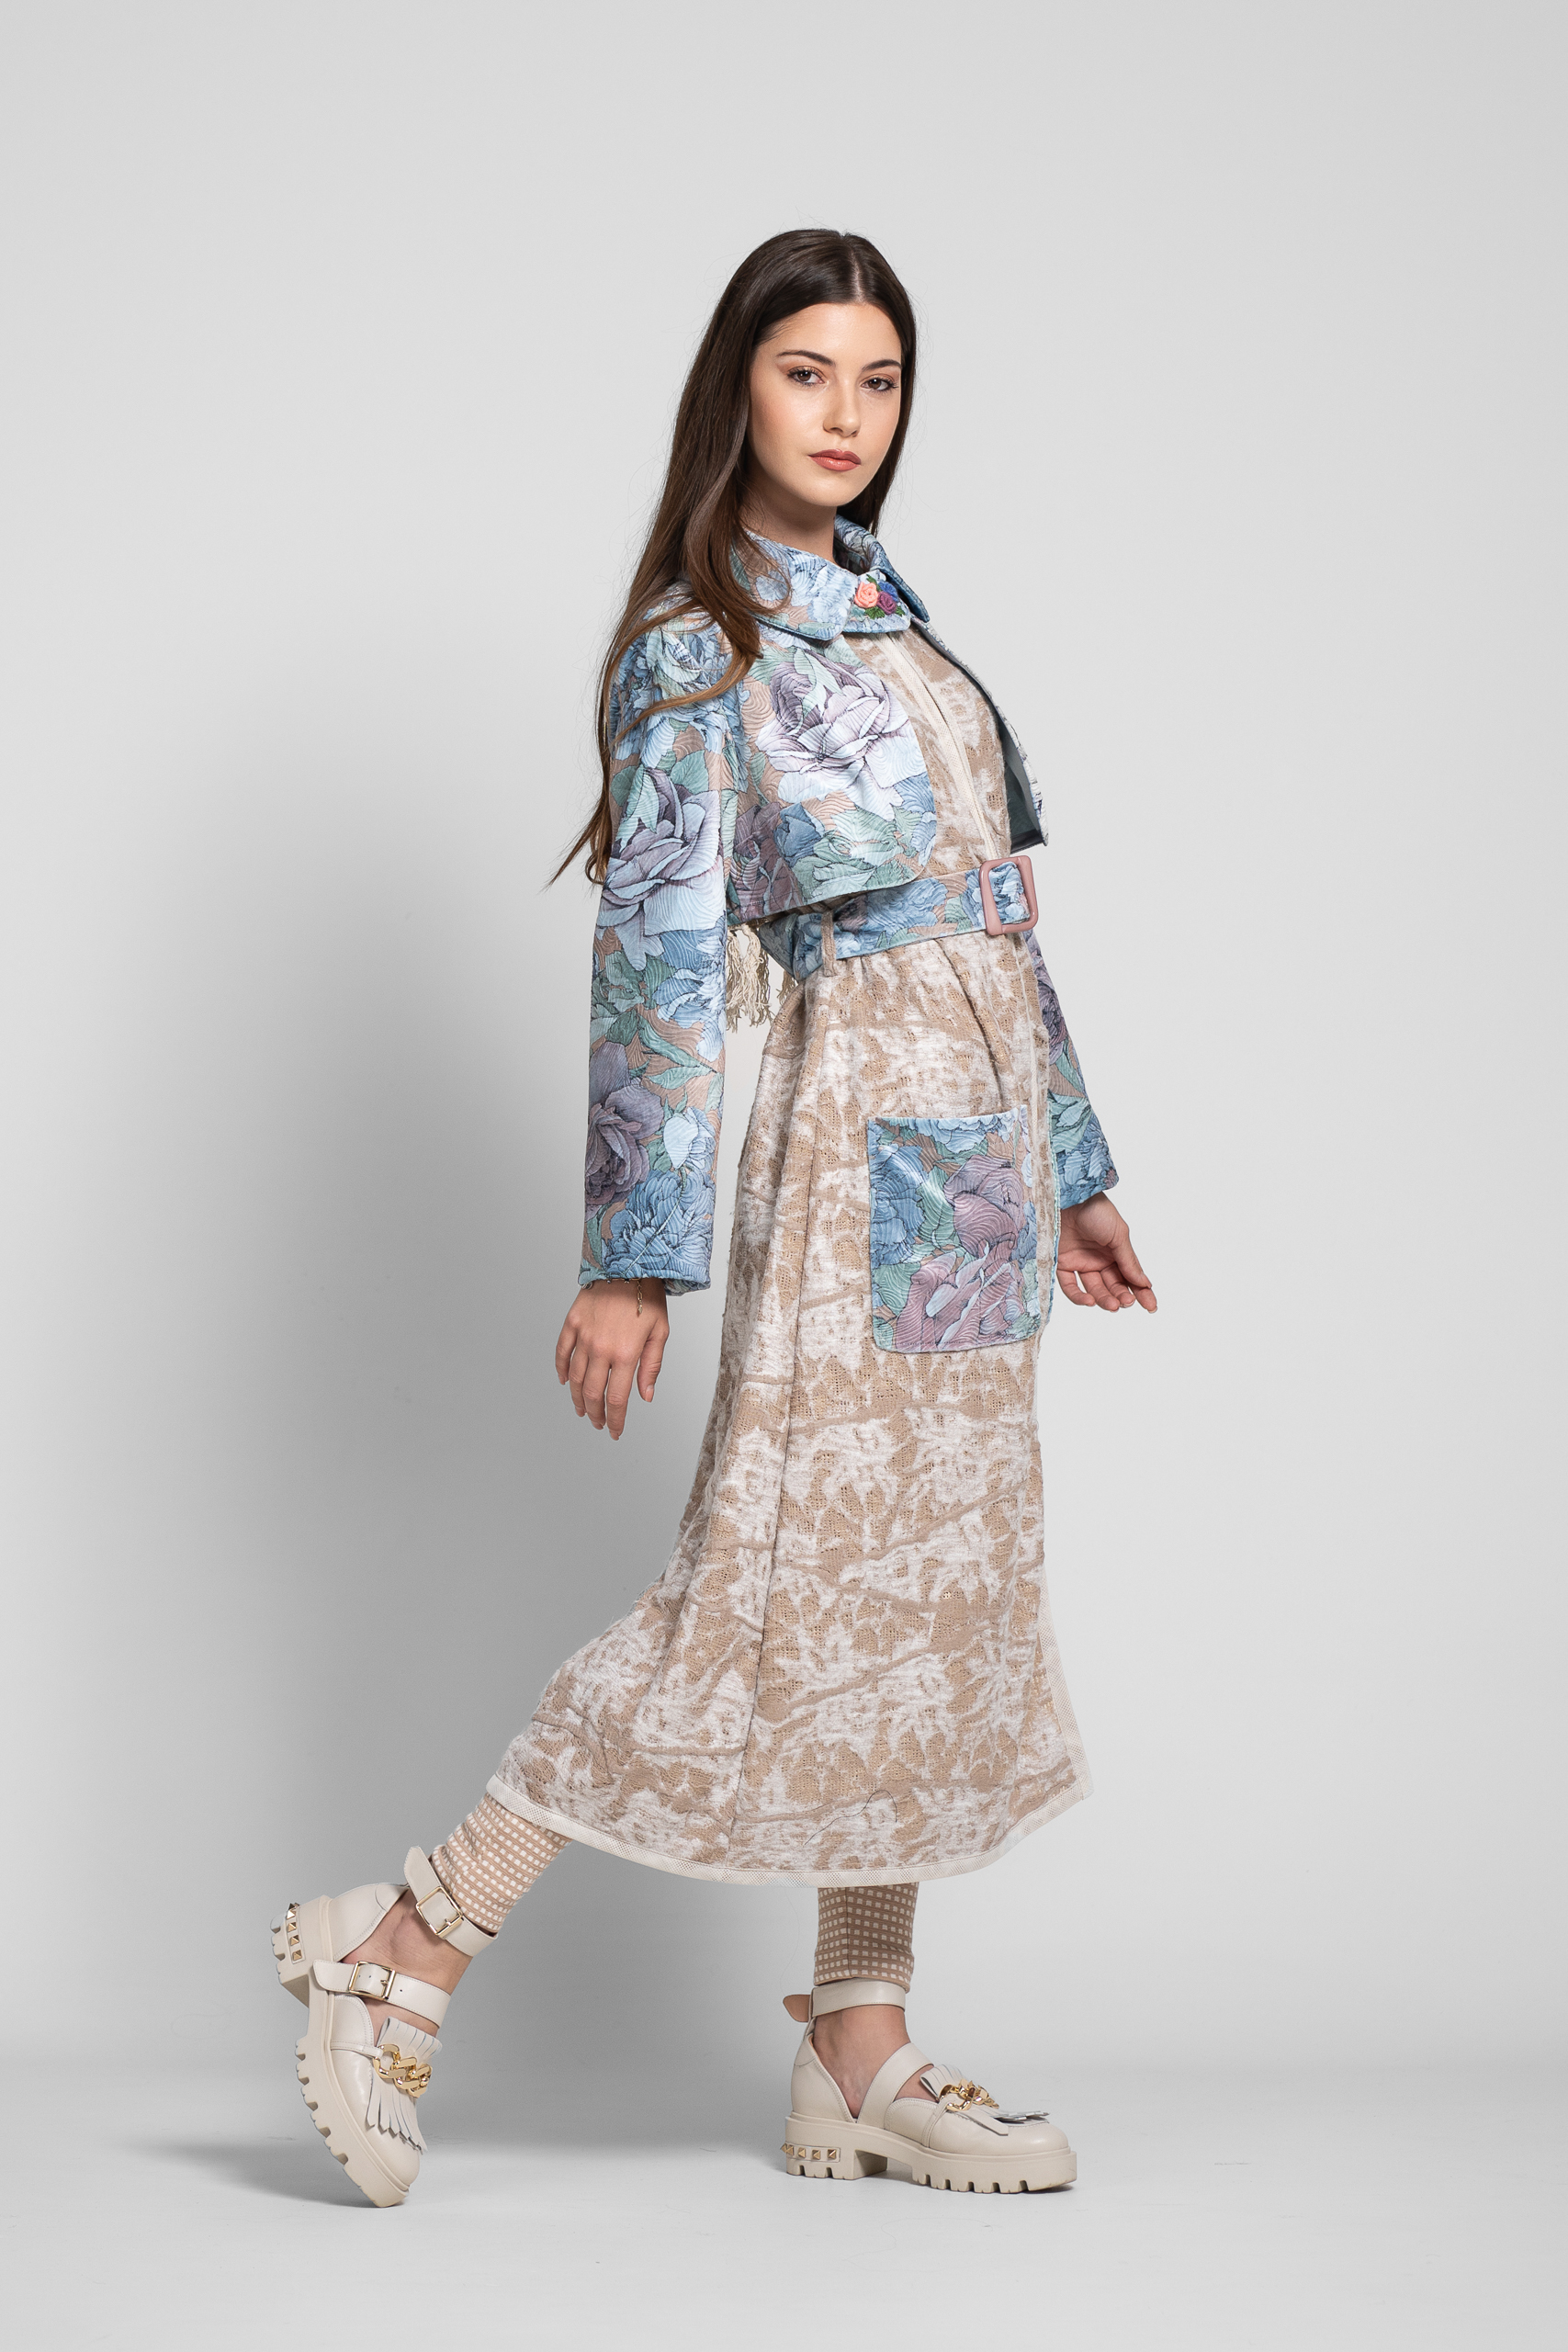 KATO OVERCOAT in velvet with floral print. Natural fabrics, original design, handmade embroidery